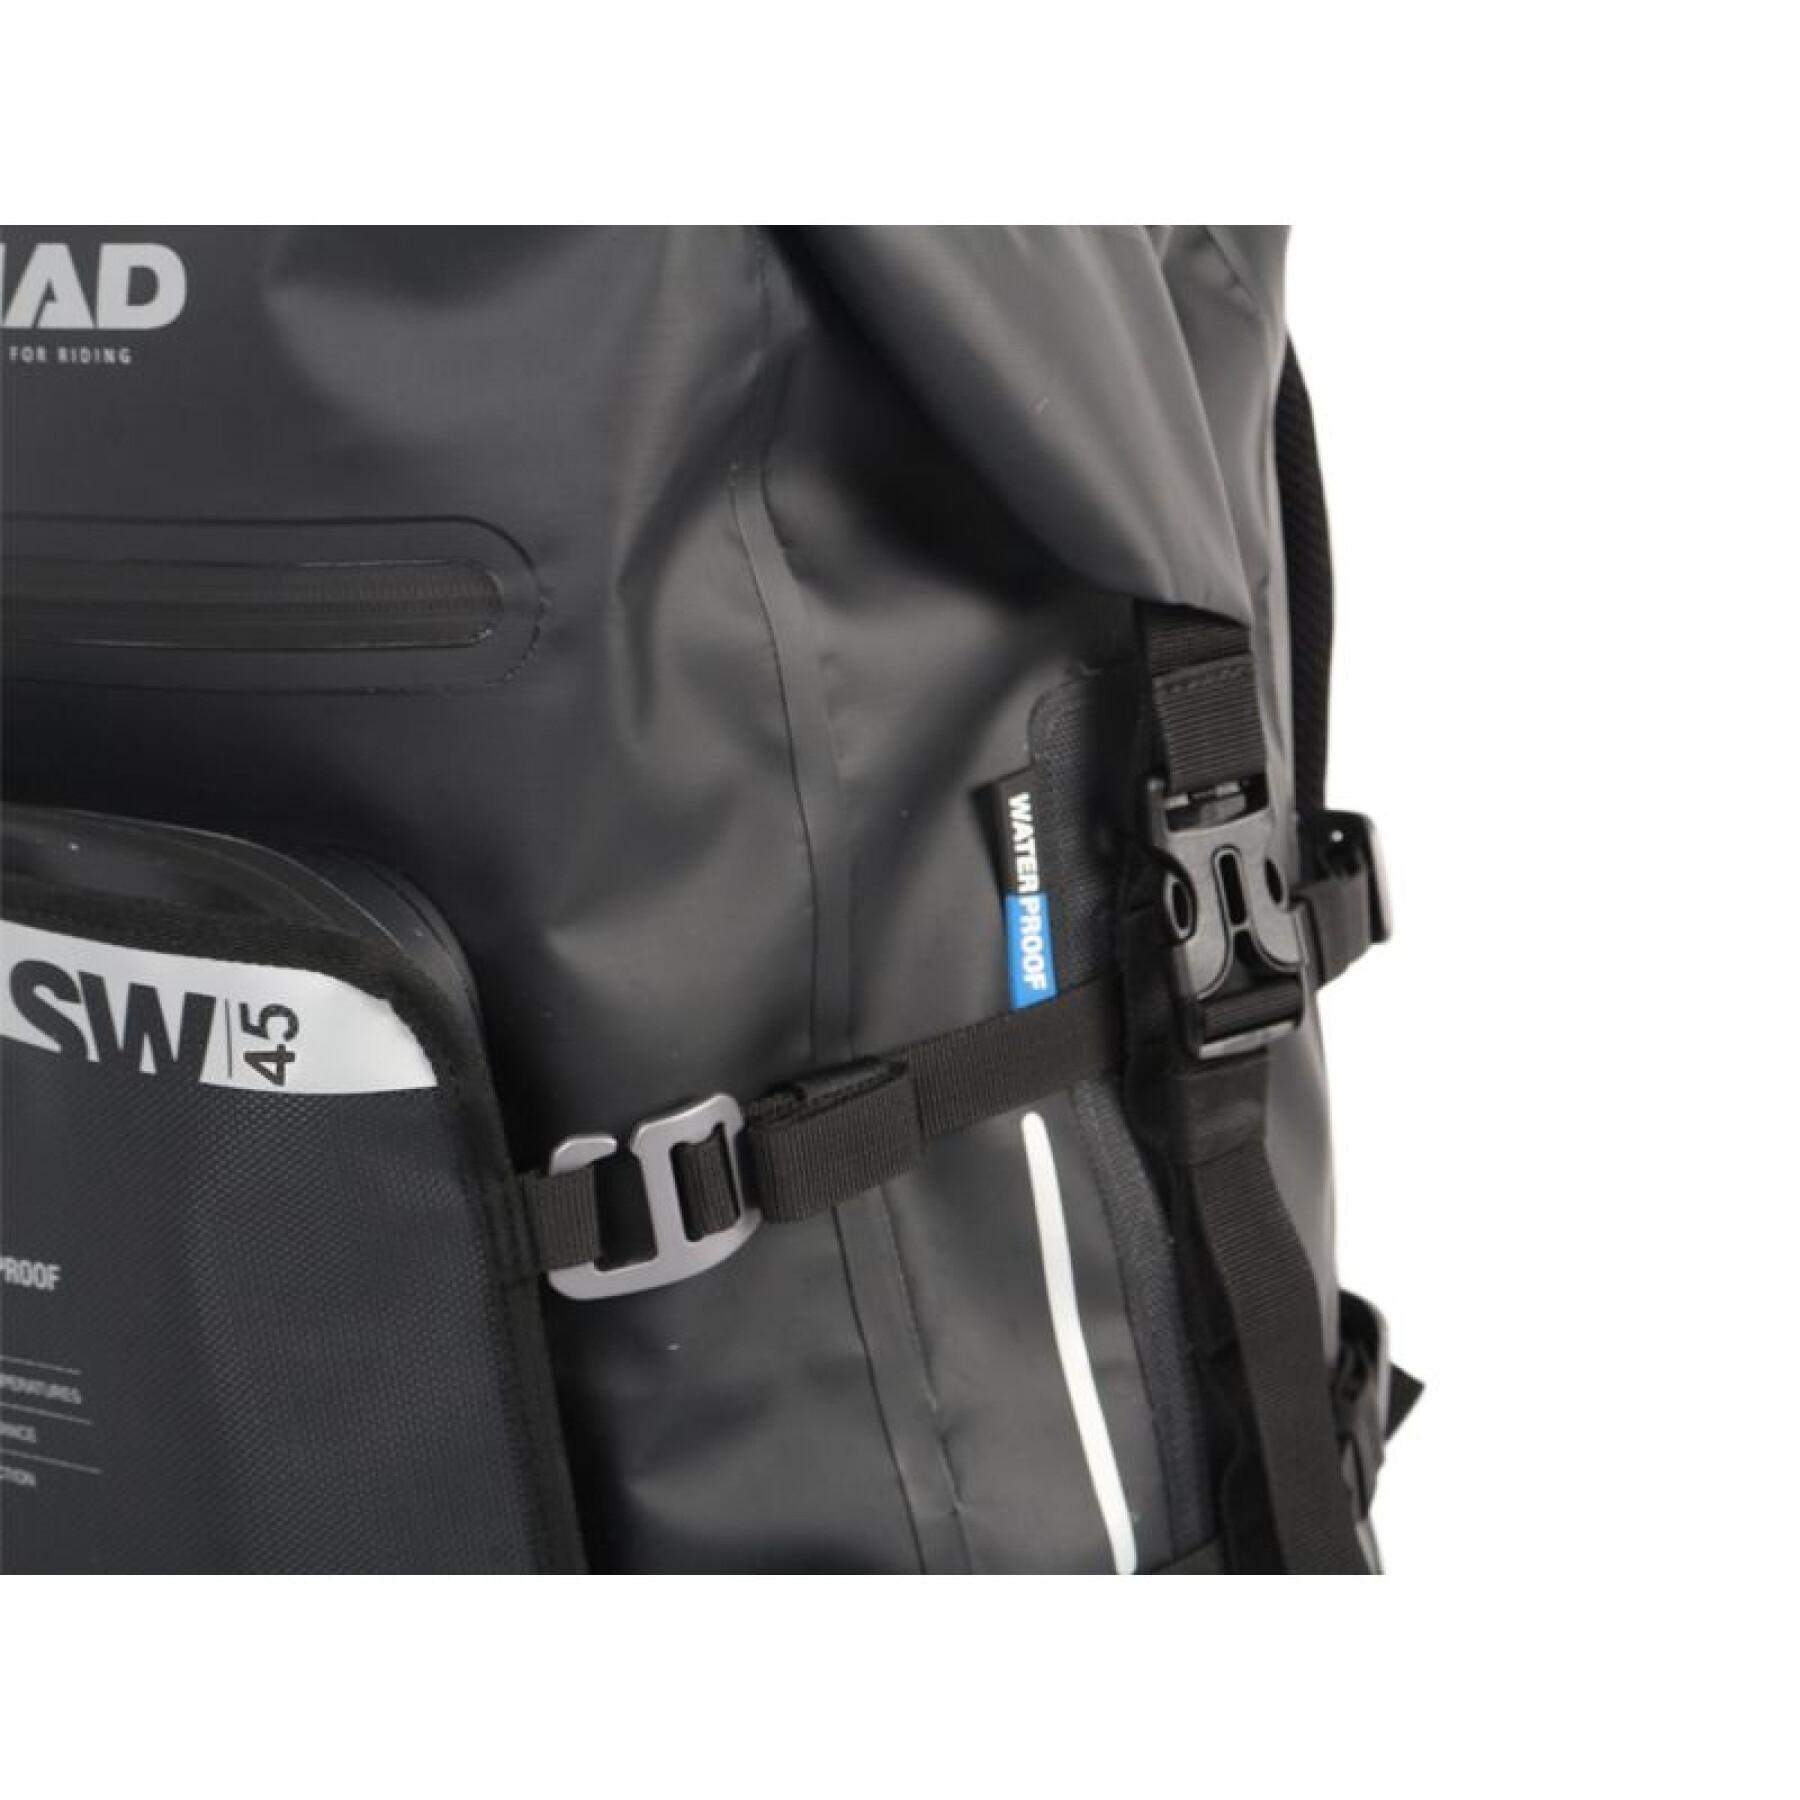 Waterproof saddle bag sw45 Shad